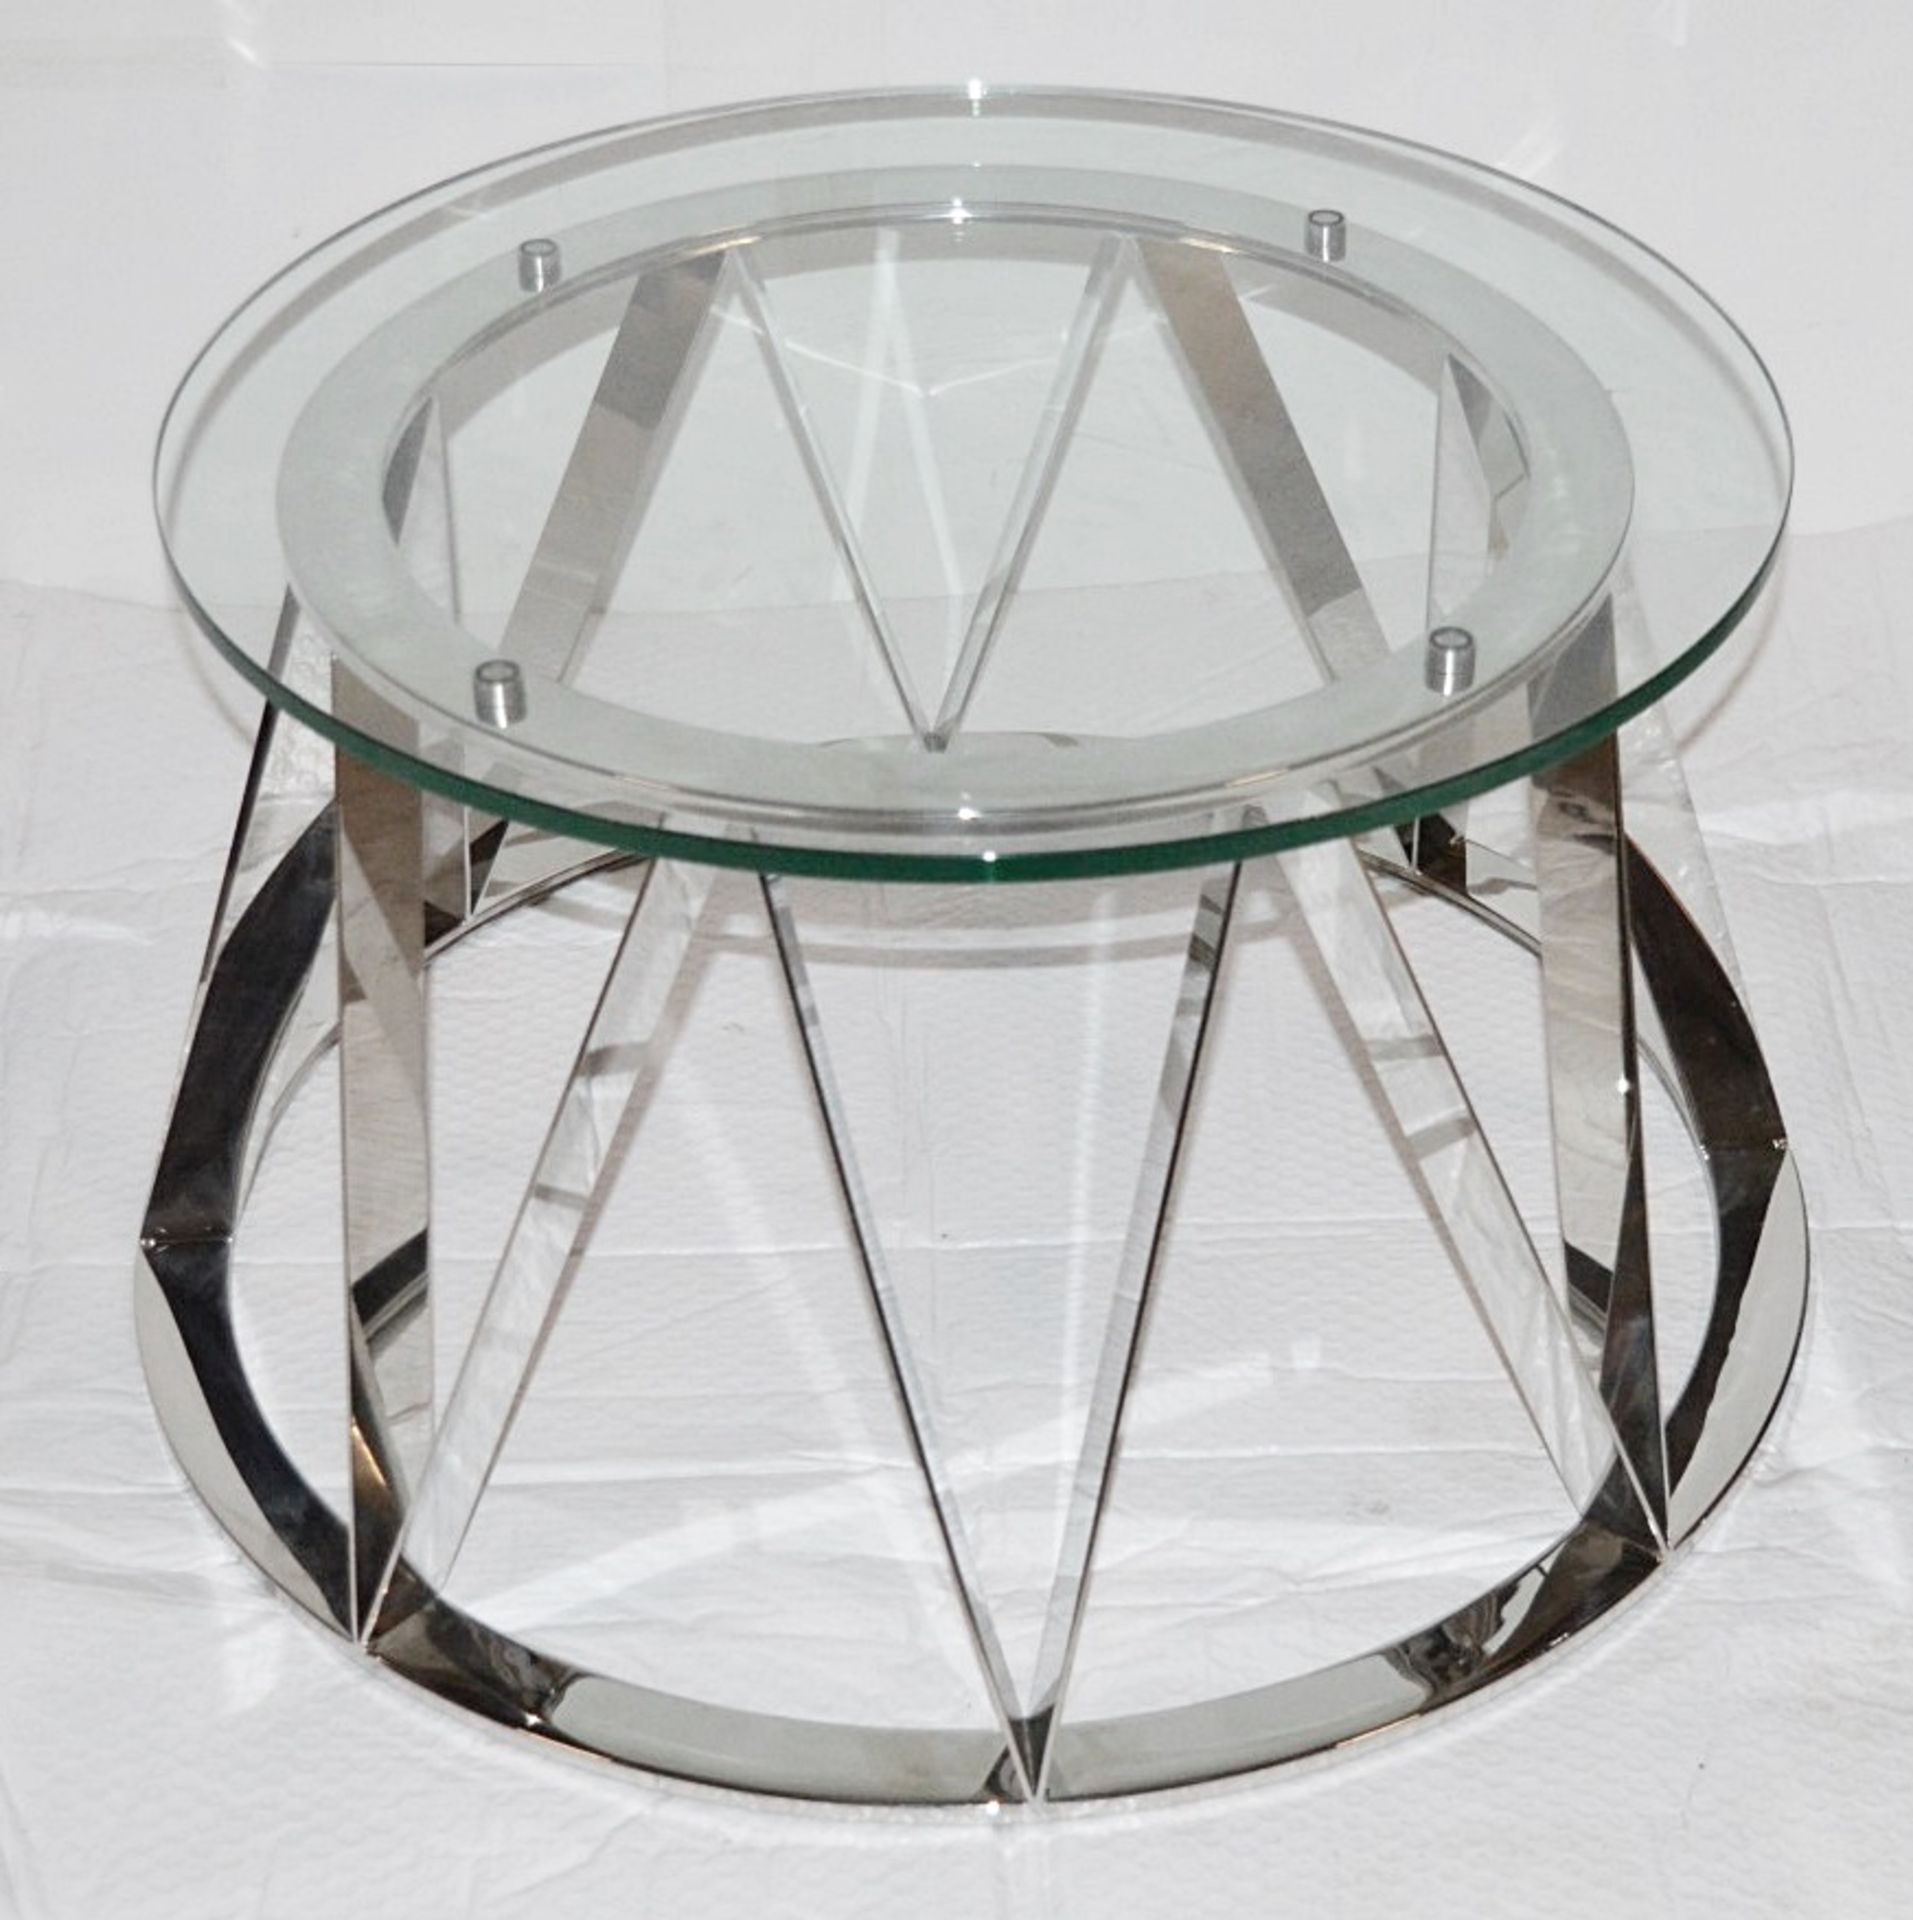 1 x Chelsom Drum-shaped Glass Topped Designer Lamp Table - Dimensions: Diameter 60cm x H38cm -